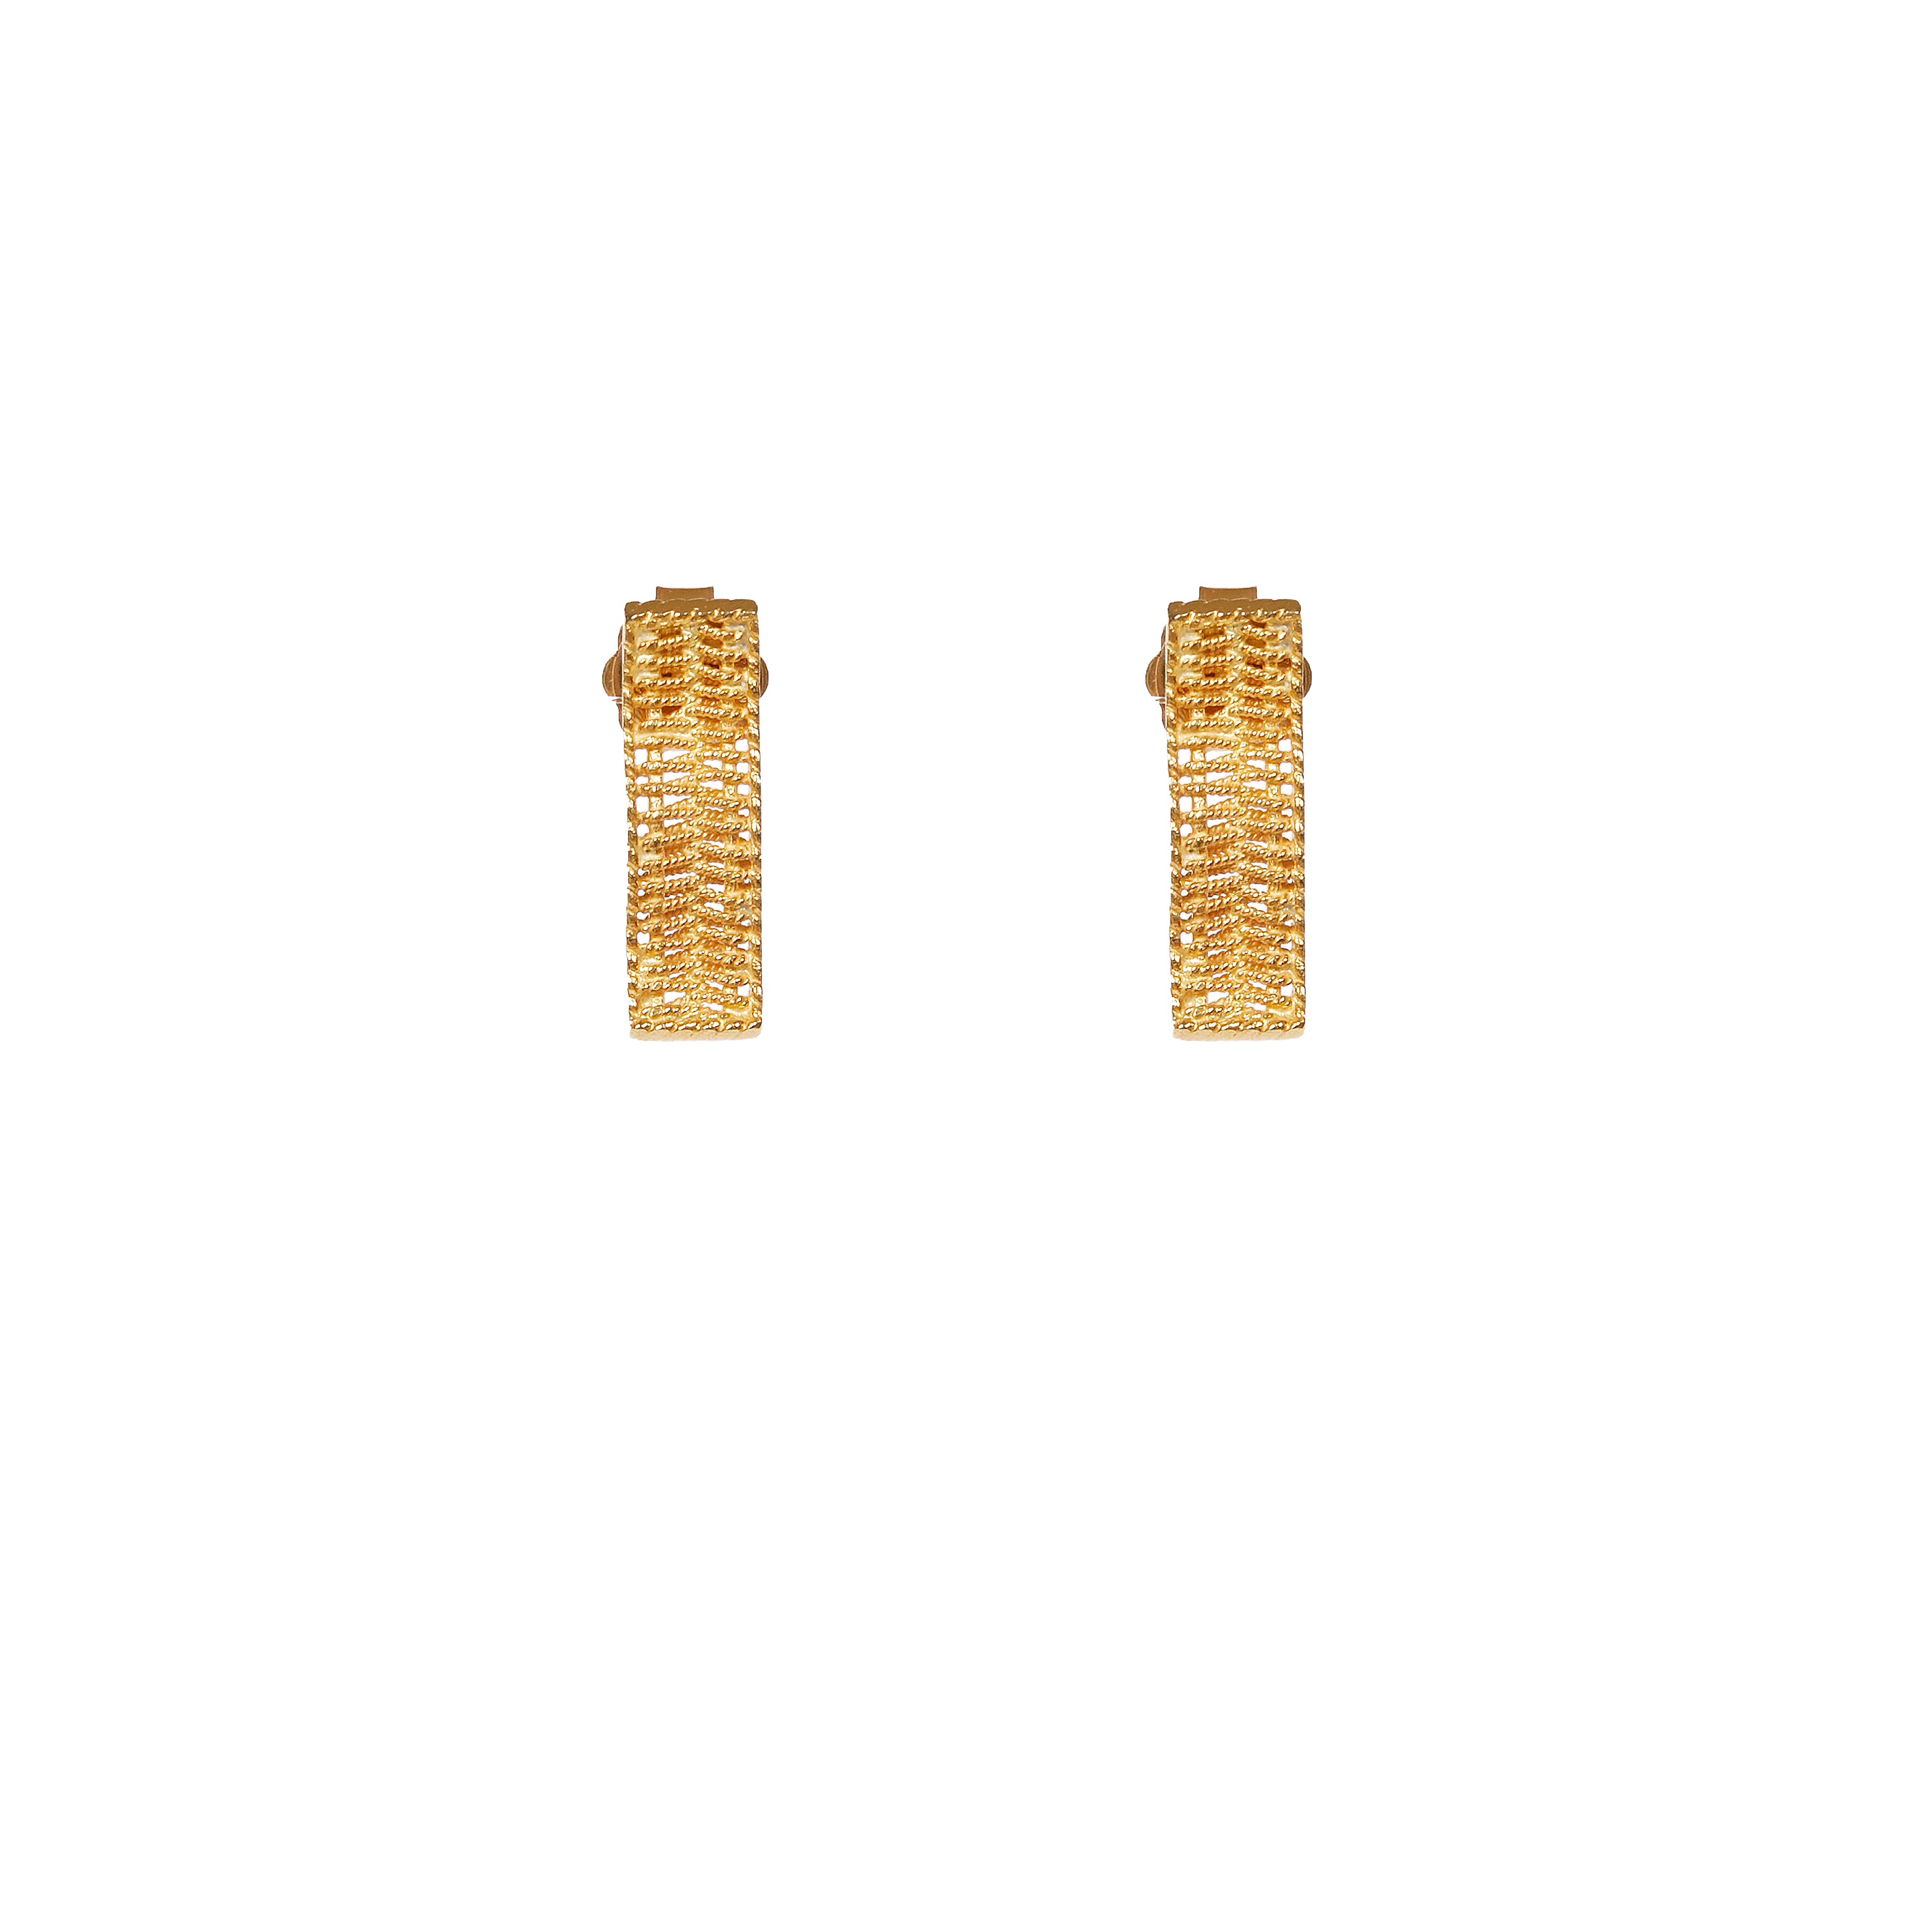 Earrings GRANDMA - Filigree - Gold-plated silver | MEA AYAYA